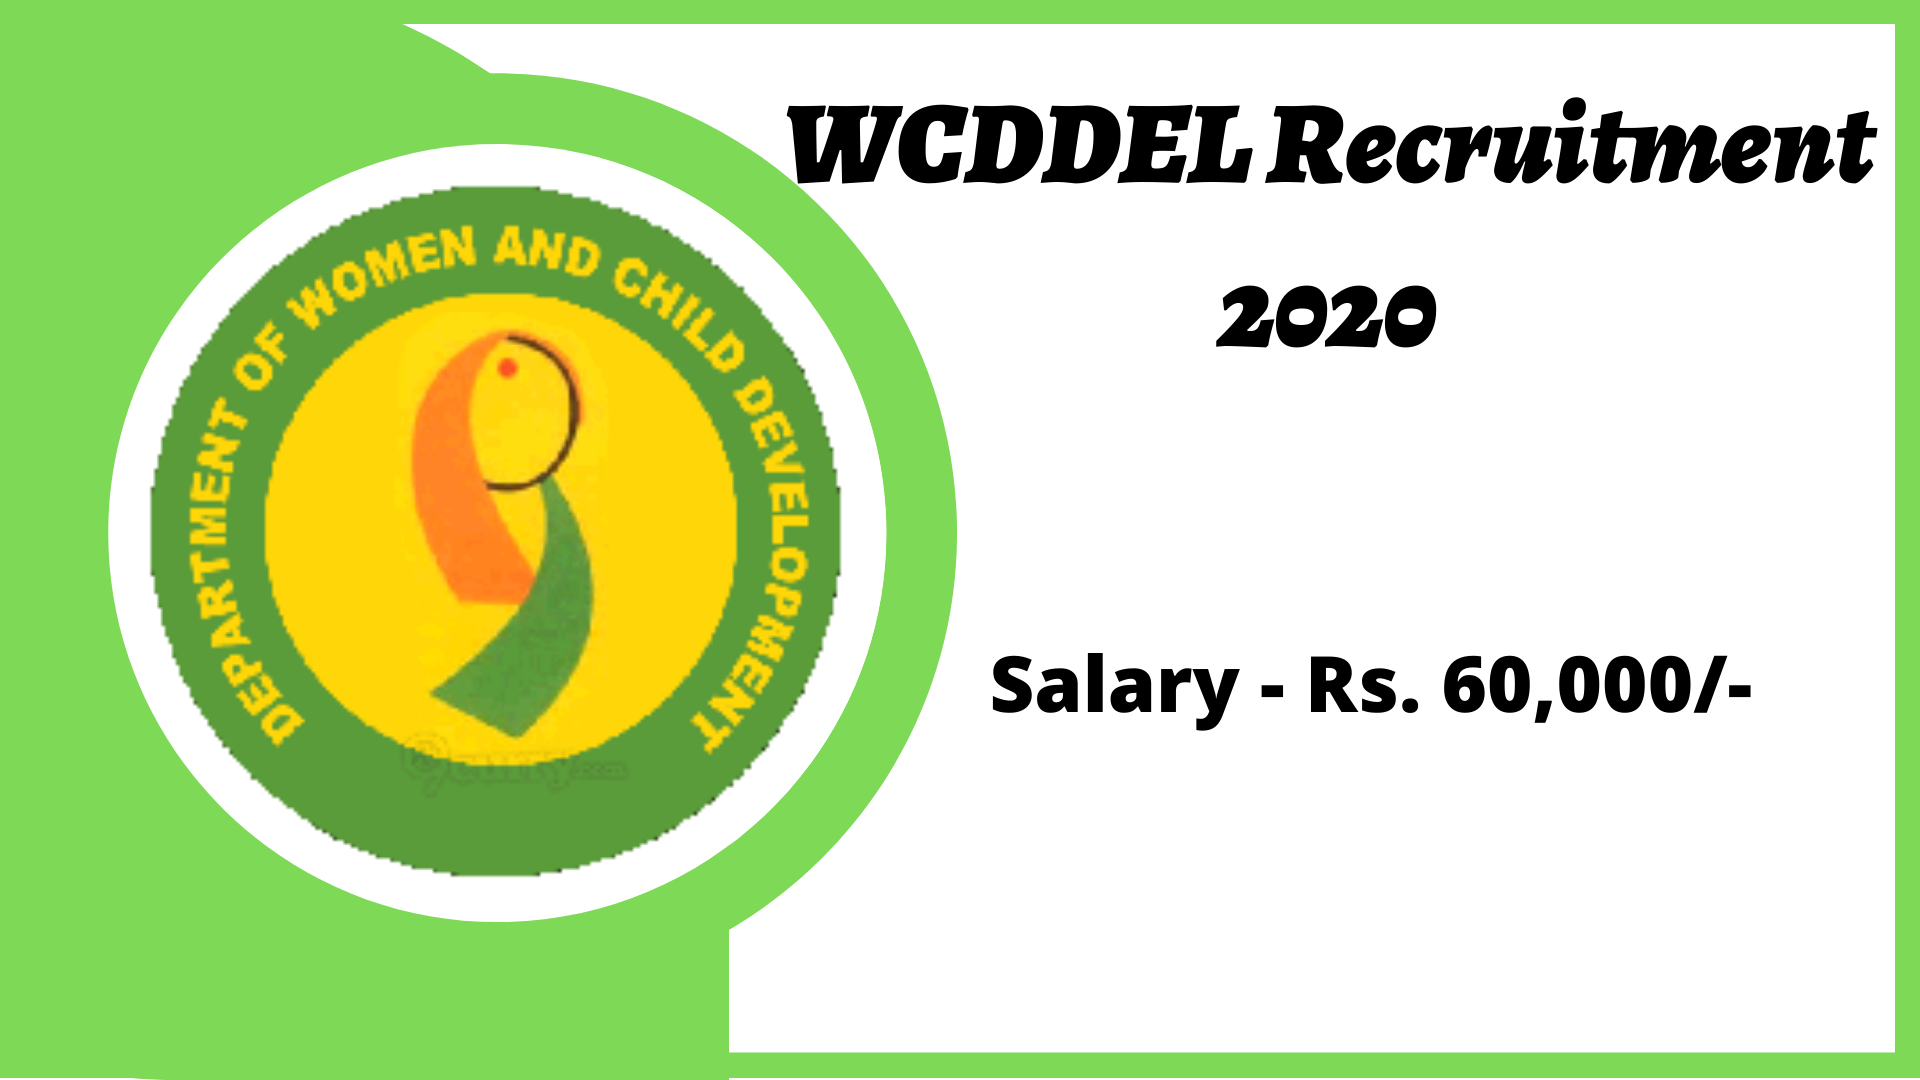 WCDDEL Recruitment 2020